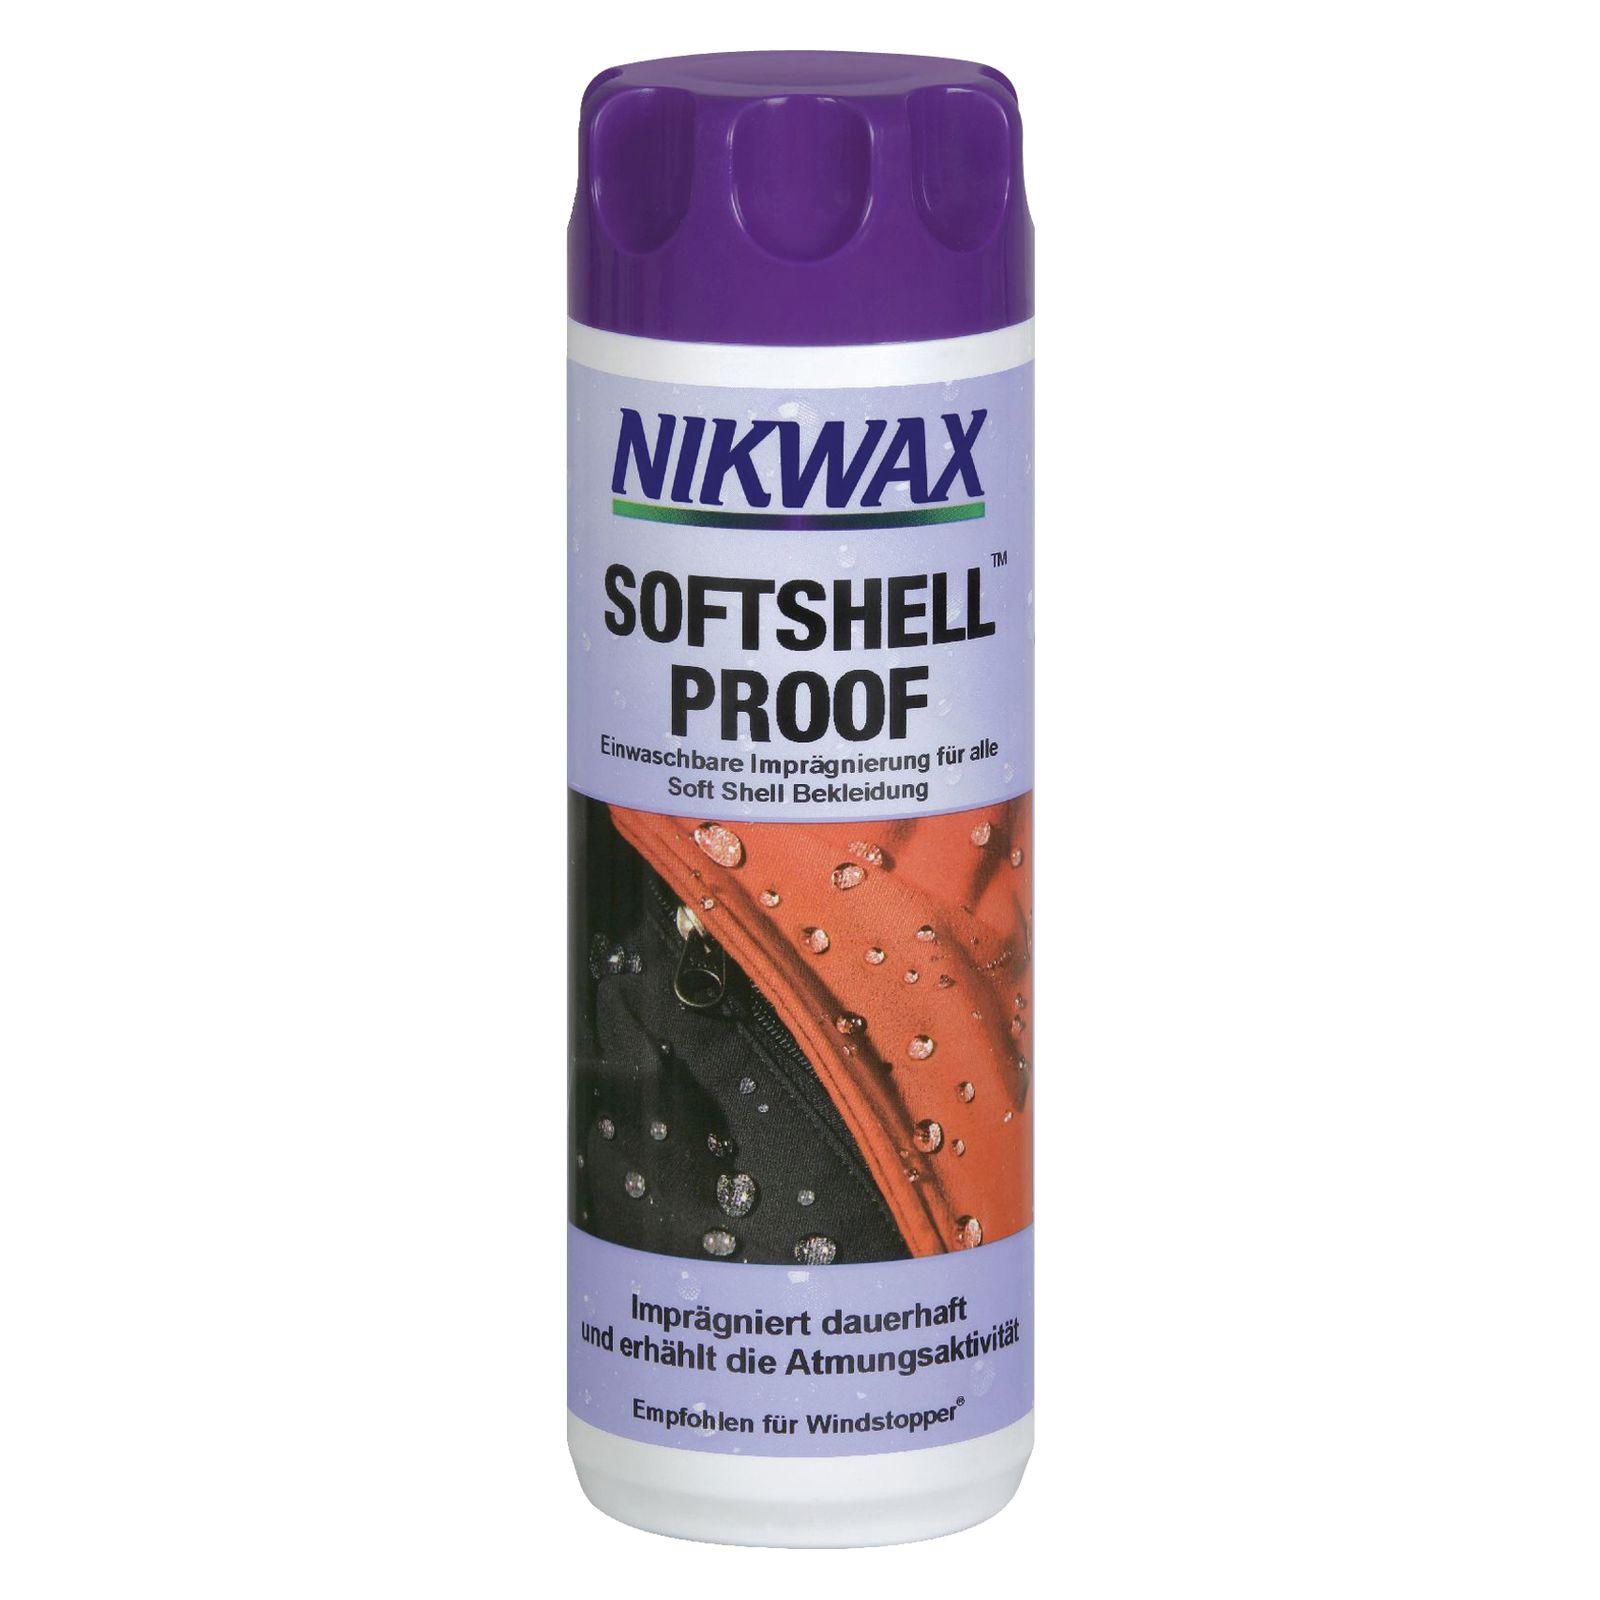 NIKWAX Softshell Proof Imprägnierung 300 ml